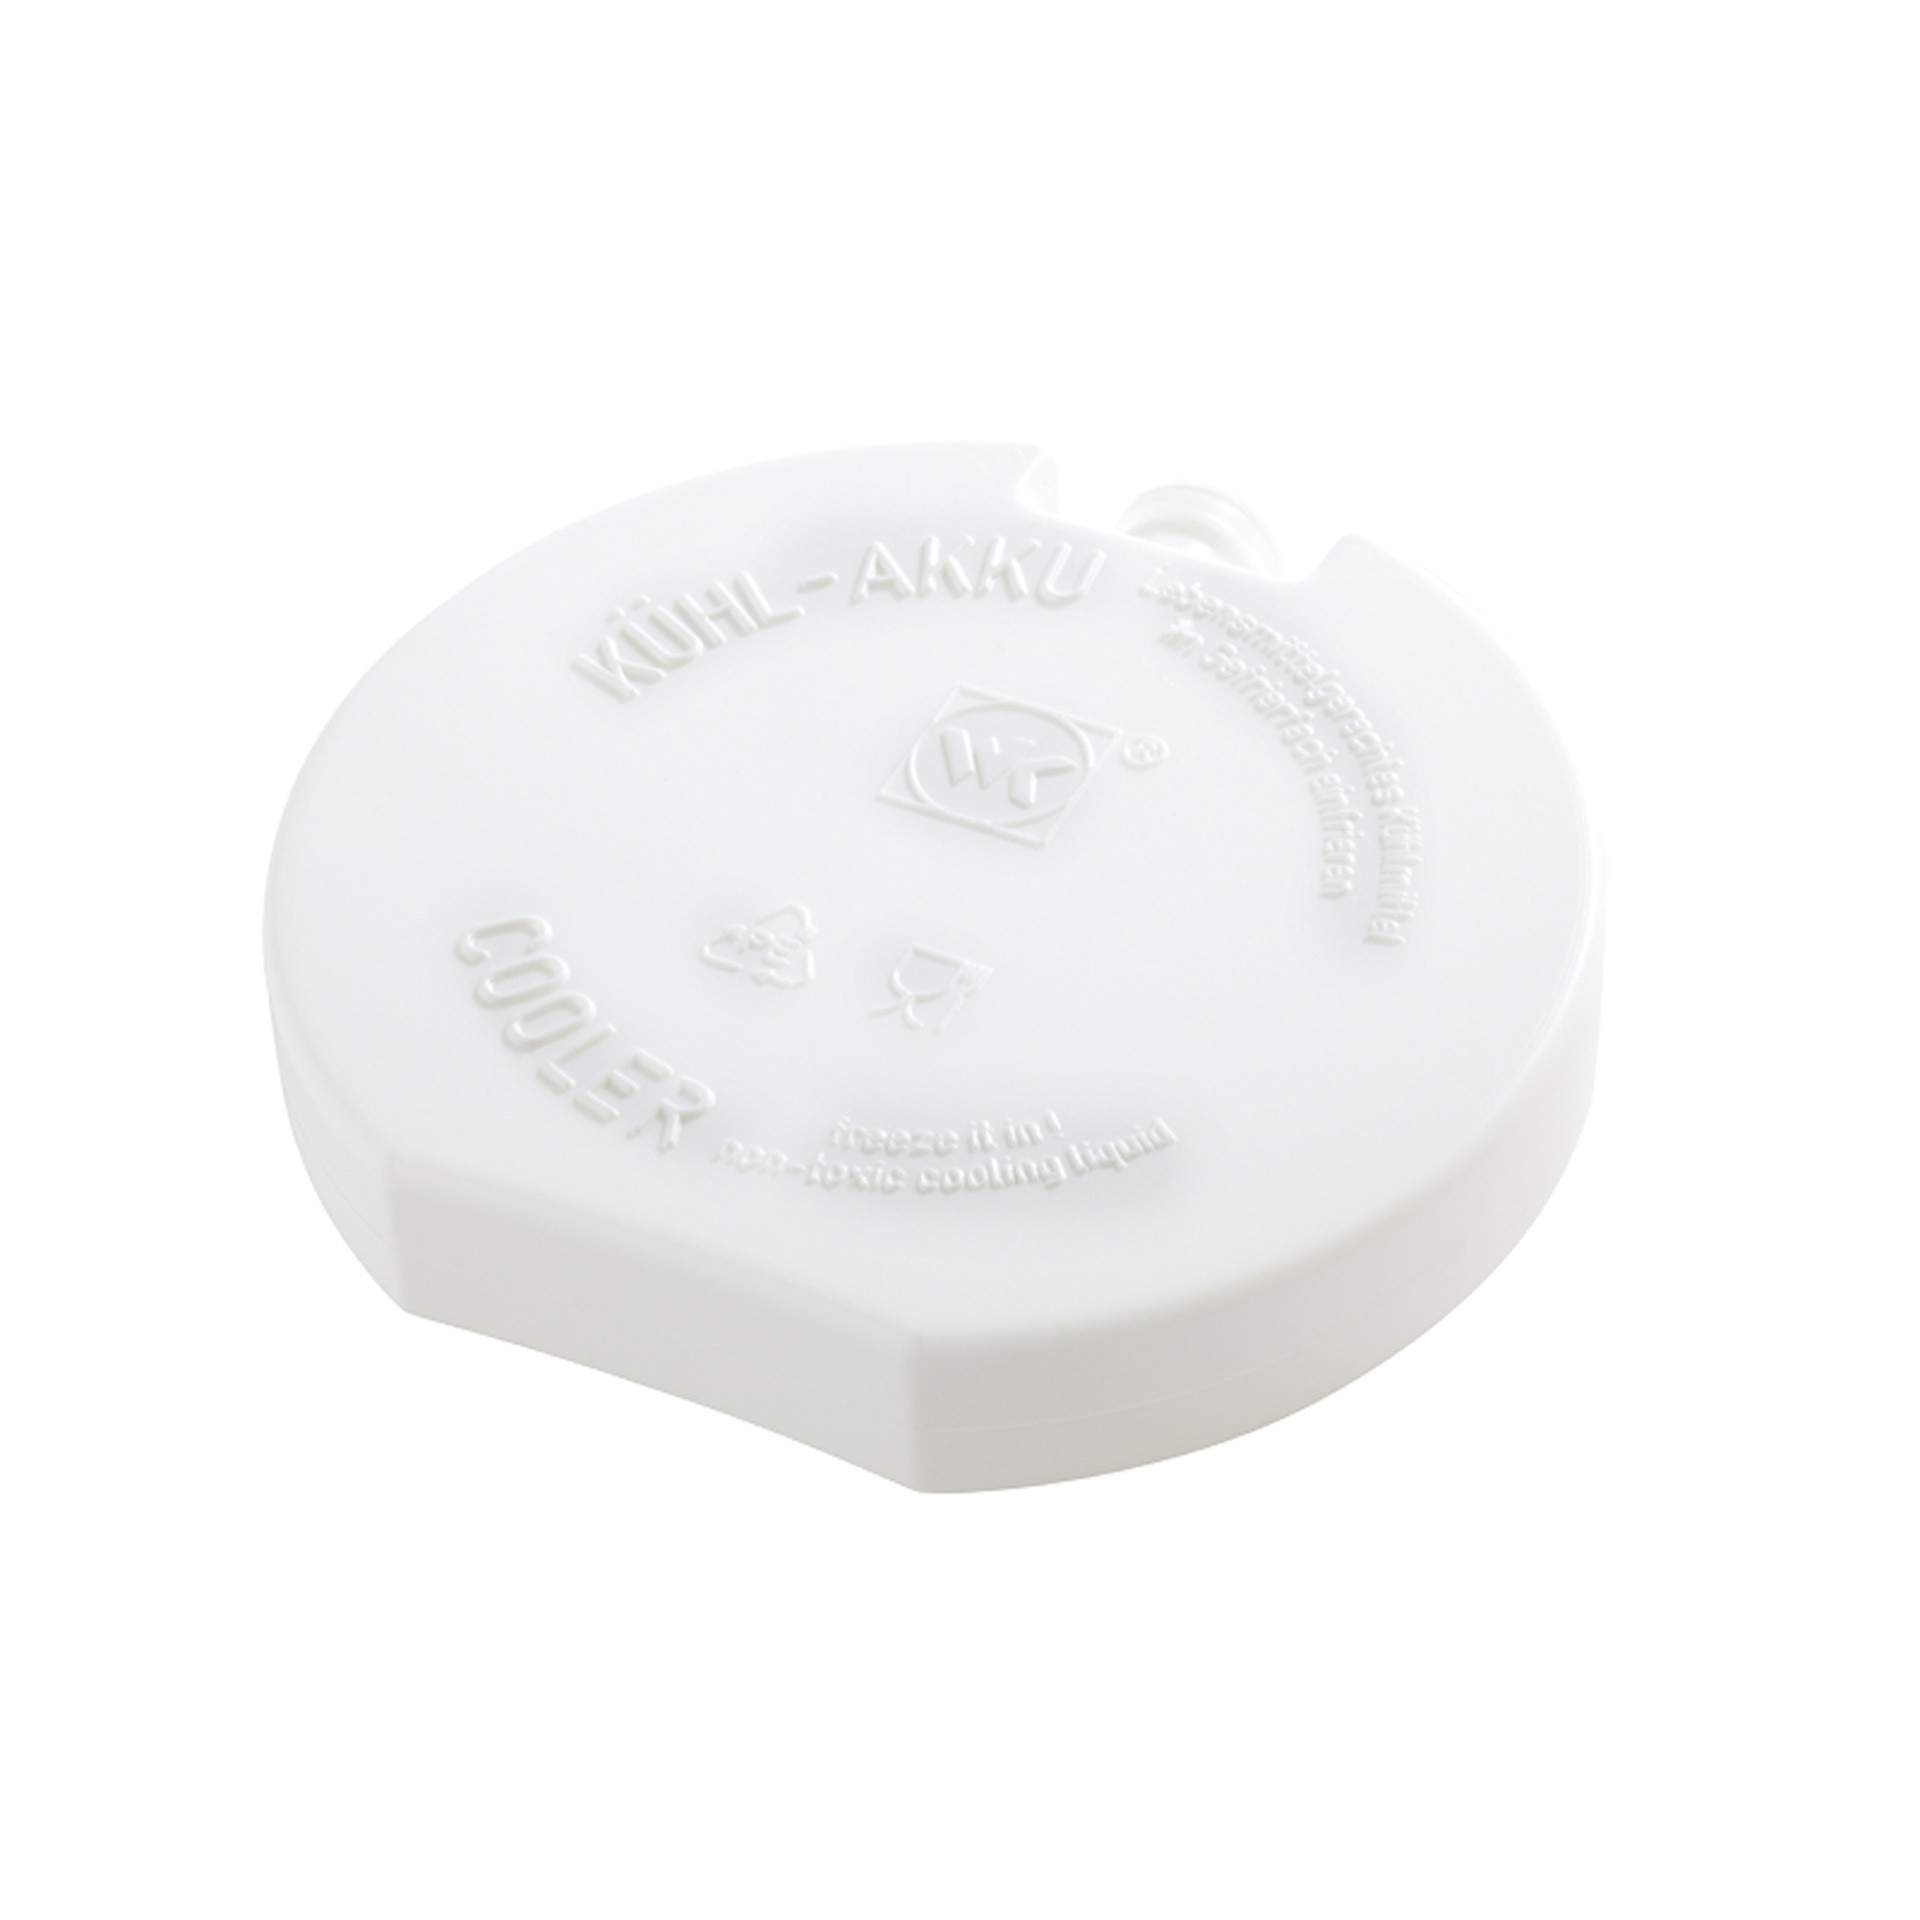 Kühlakku - gefüllt mit Kühlflüssigkeit - weiß - Abm. 2,0 cm - Ø 10,5 cm - Kunststoff - 10661-B